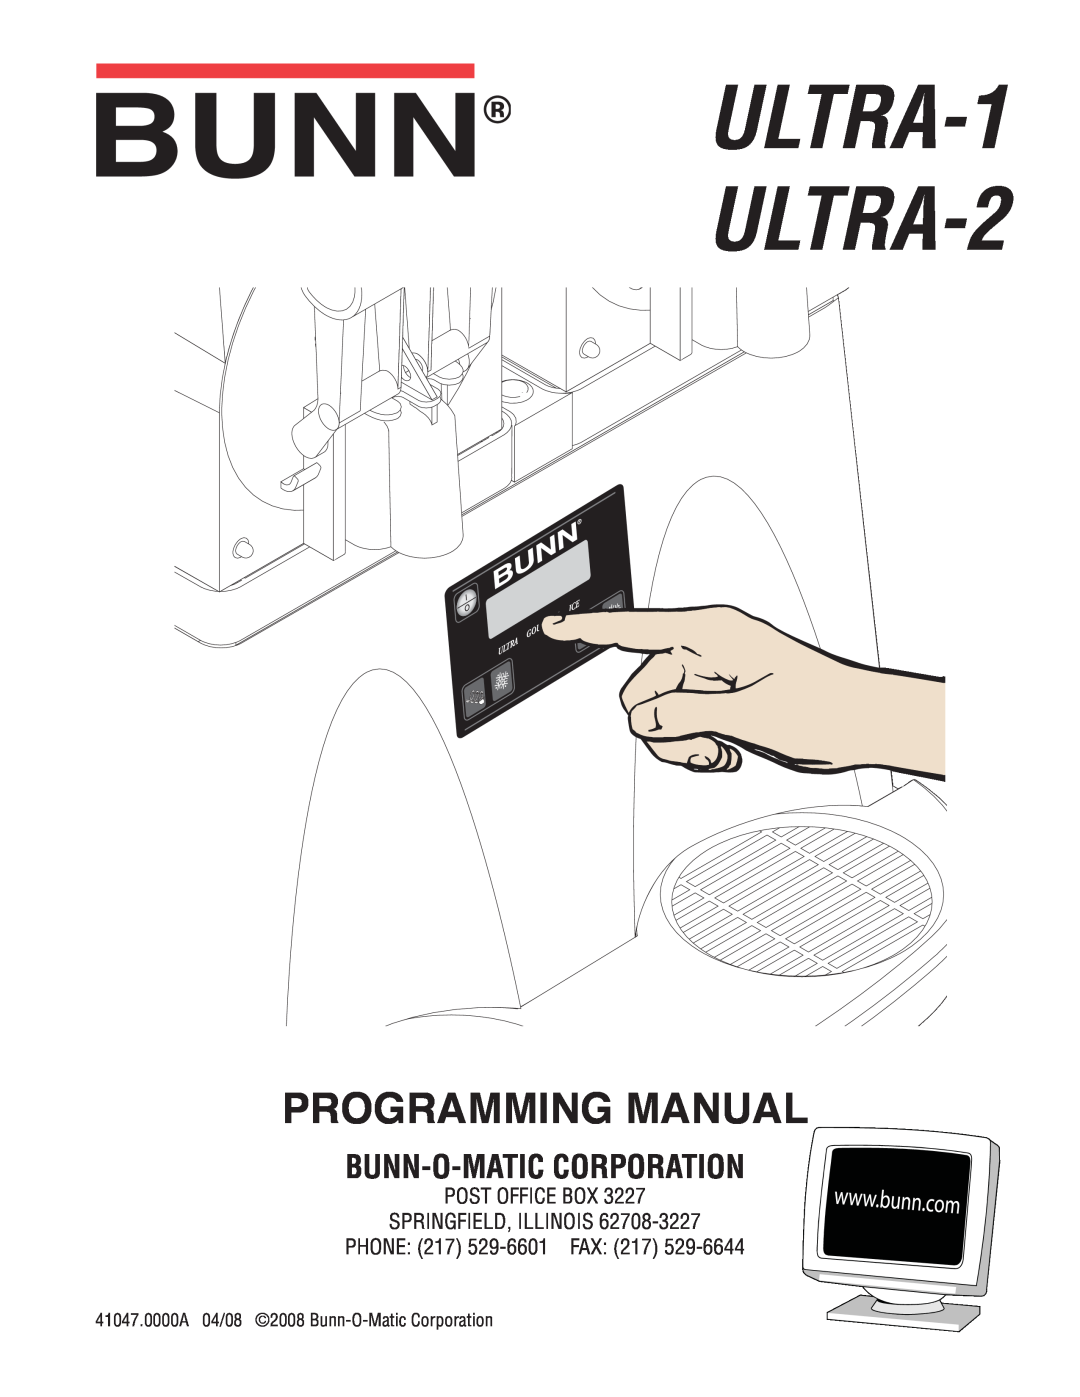 Bunn ULTRA-1 specifications Illustrated Parts Catalog, Bunn-O-Maticcorporation 